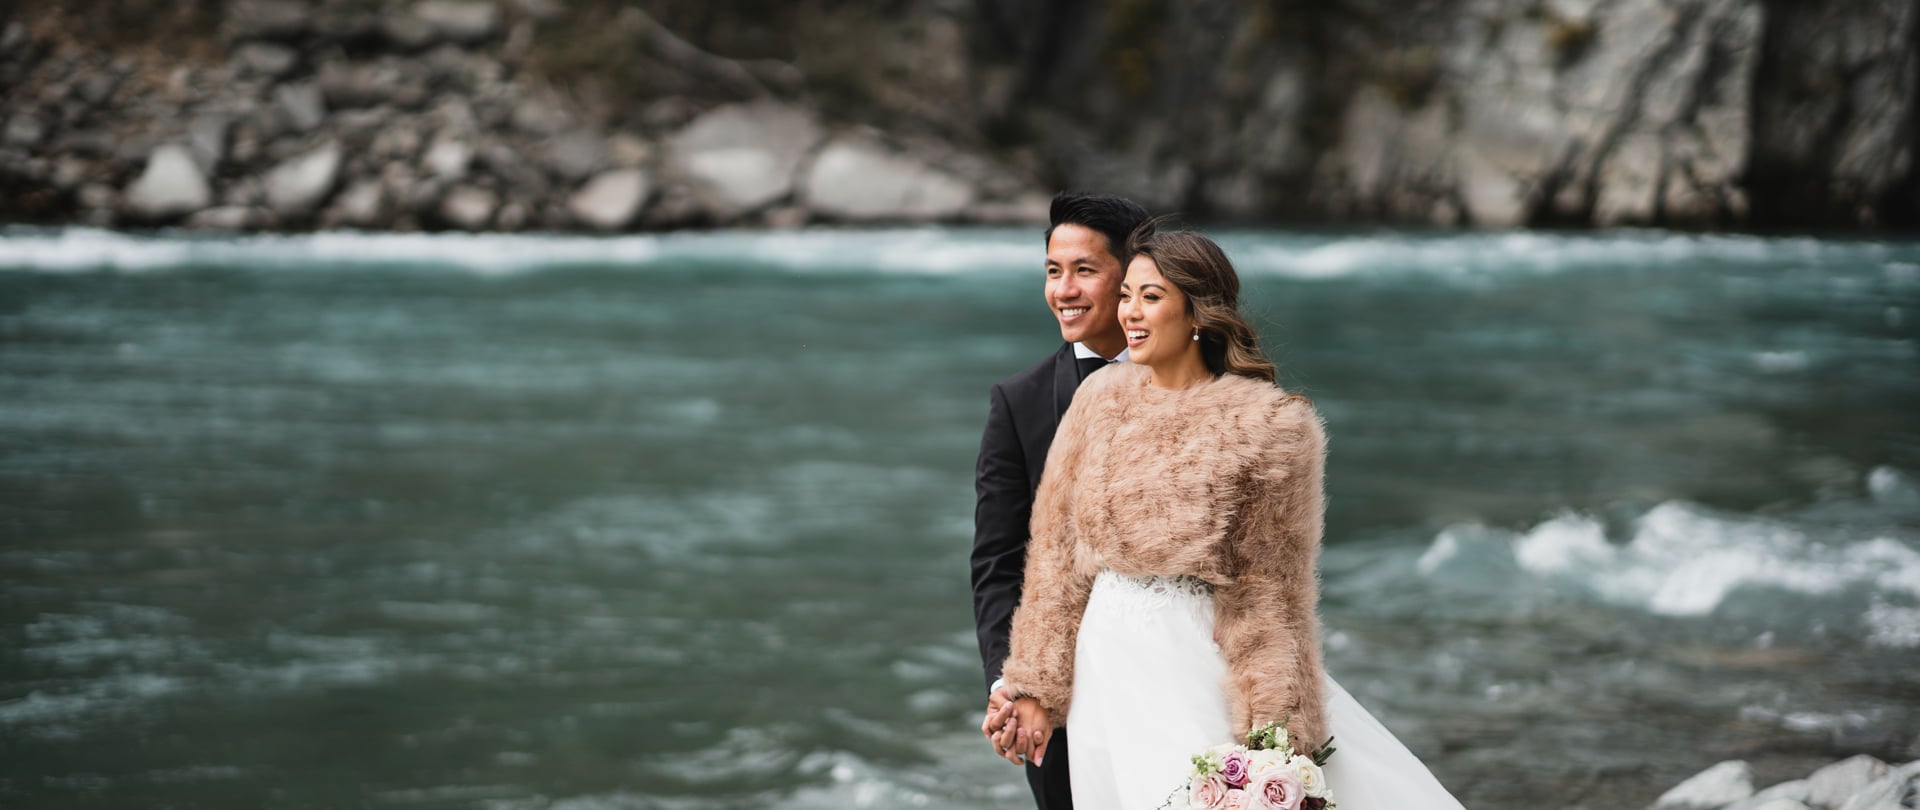 Cristine & Jeremy Wedding Video Filmed at Queenstown, New Zealand